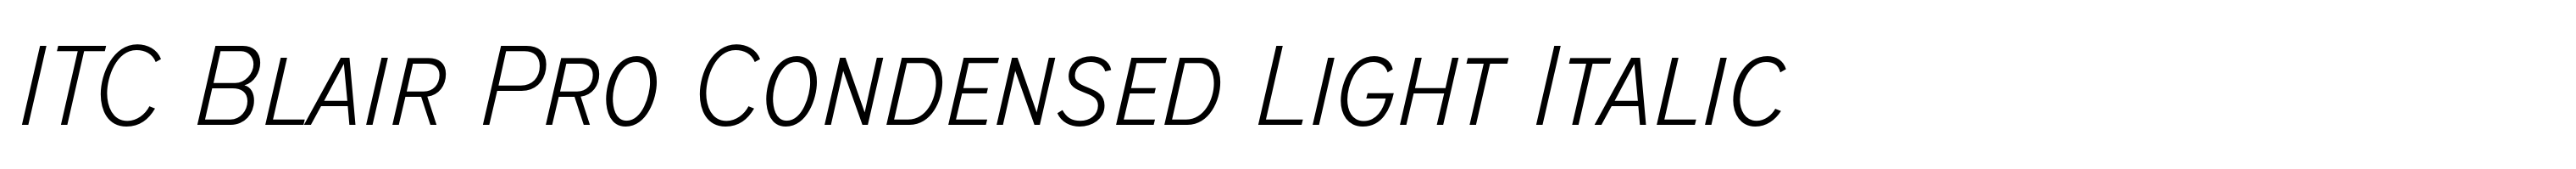 ITC Blair Pro Condensed Light Italic